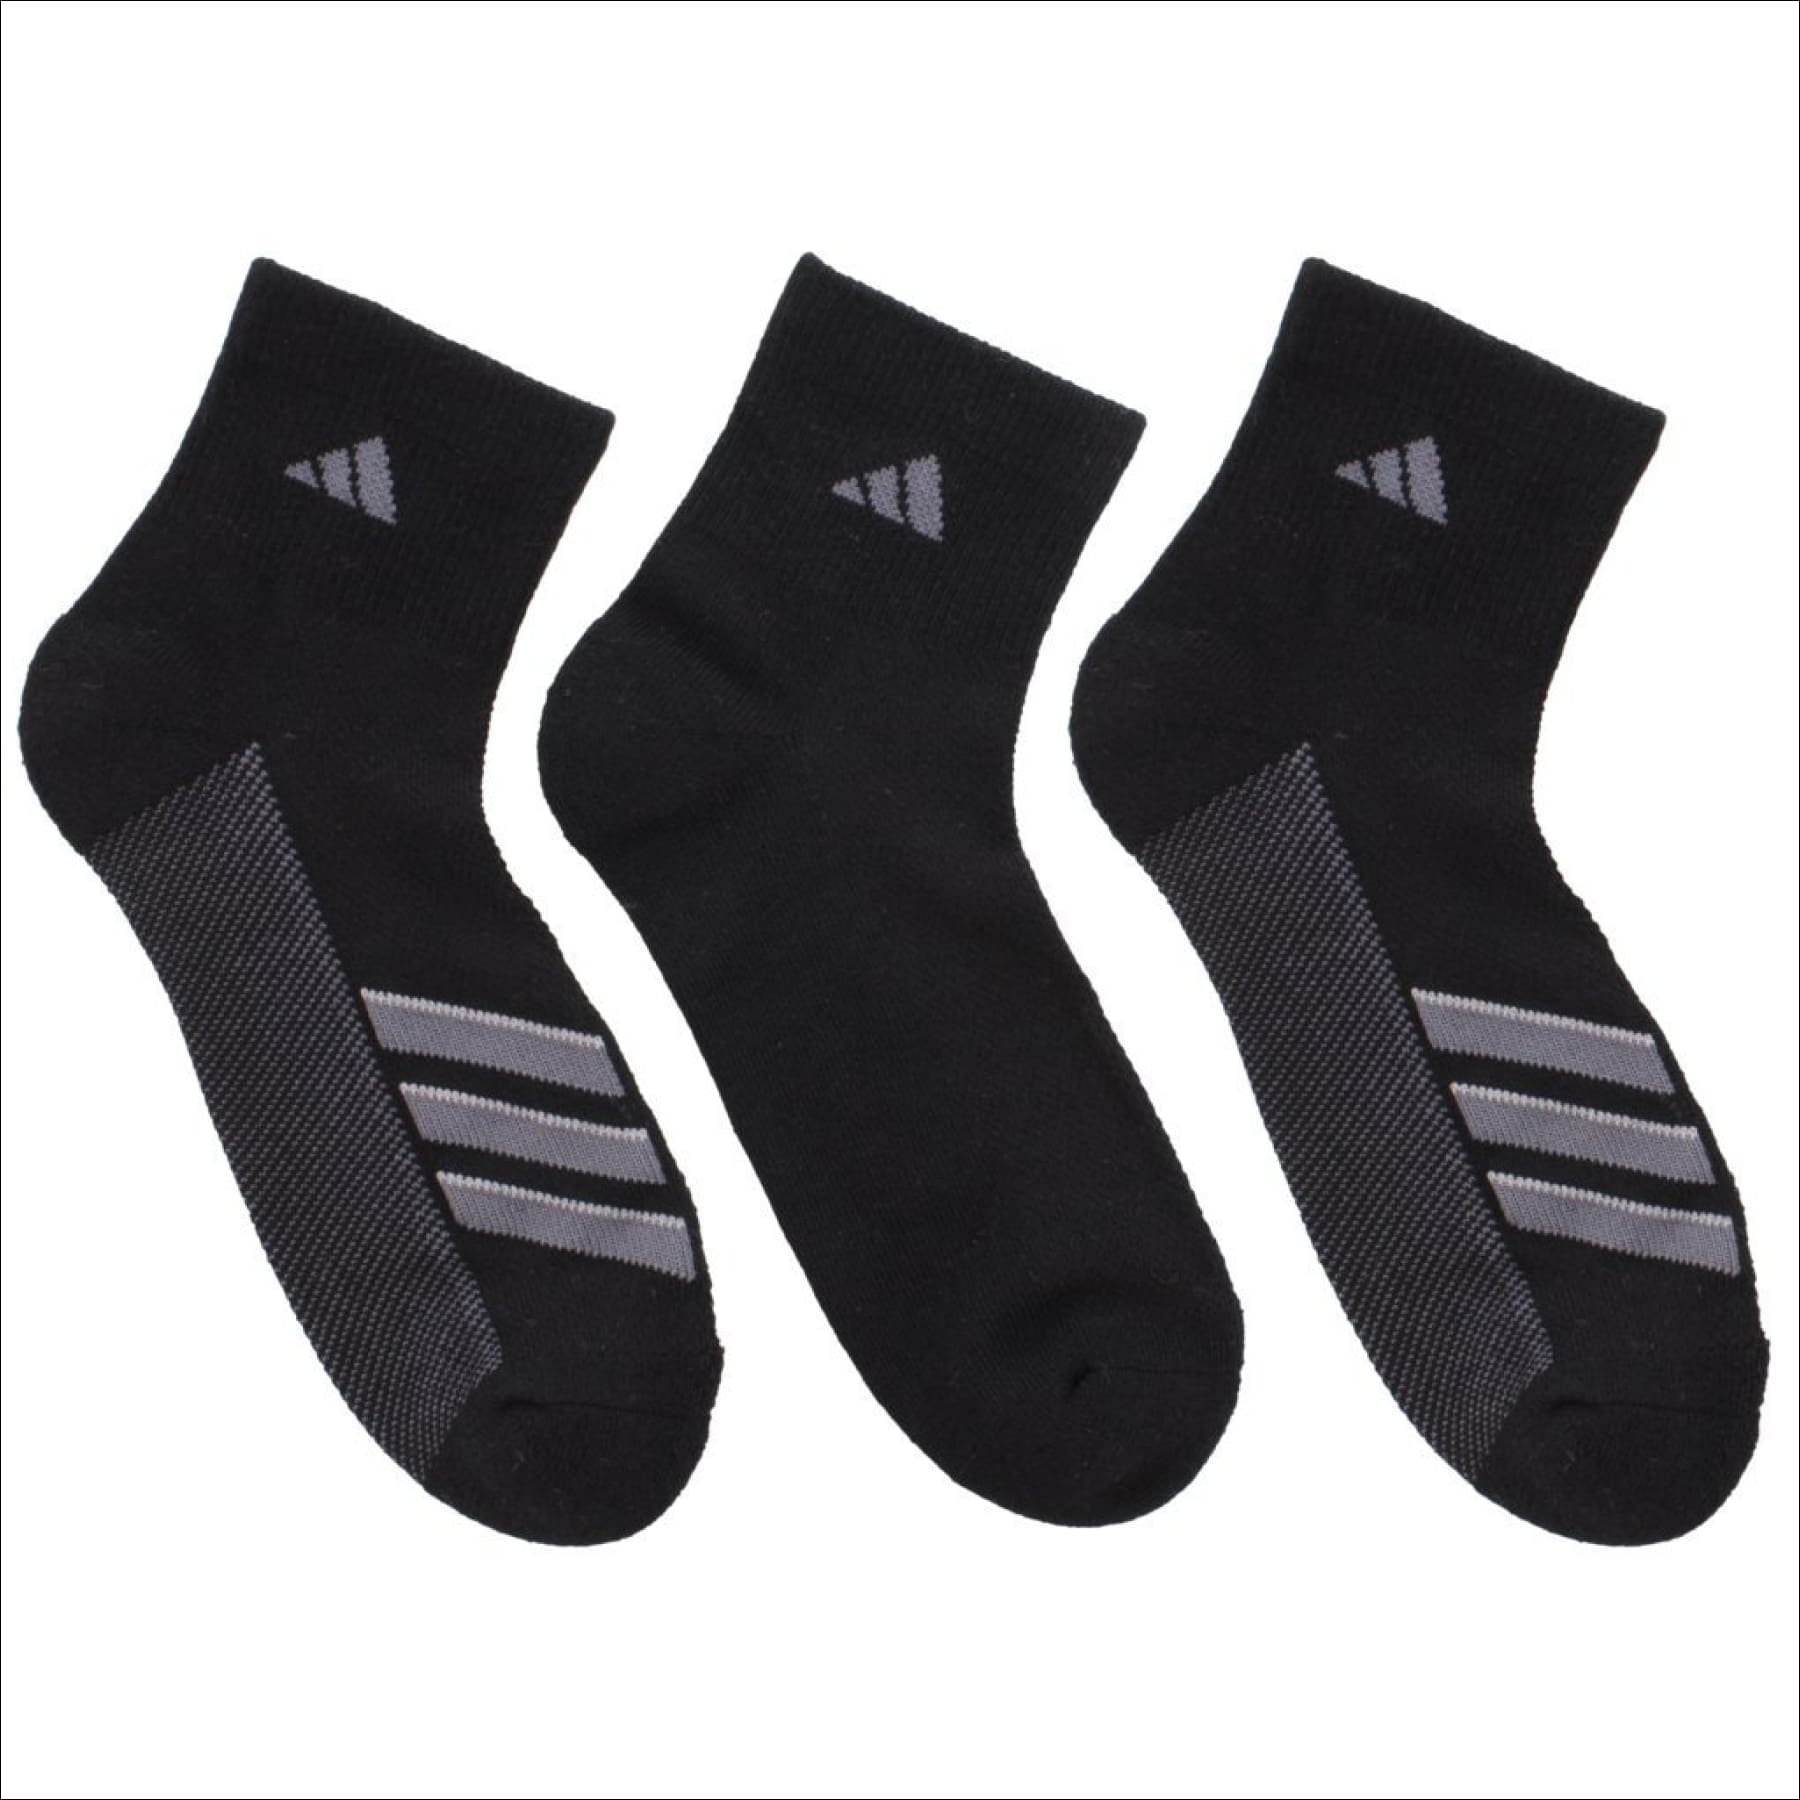 adidas climacool quarter socks